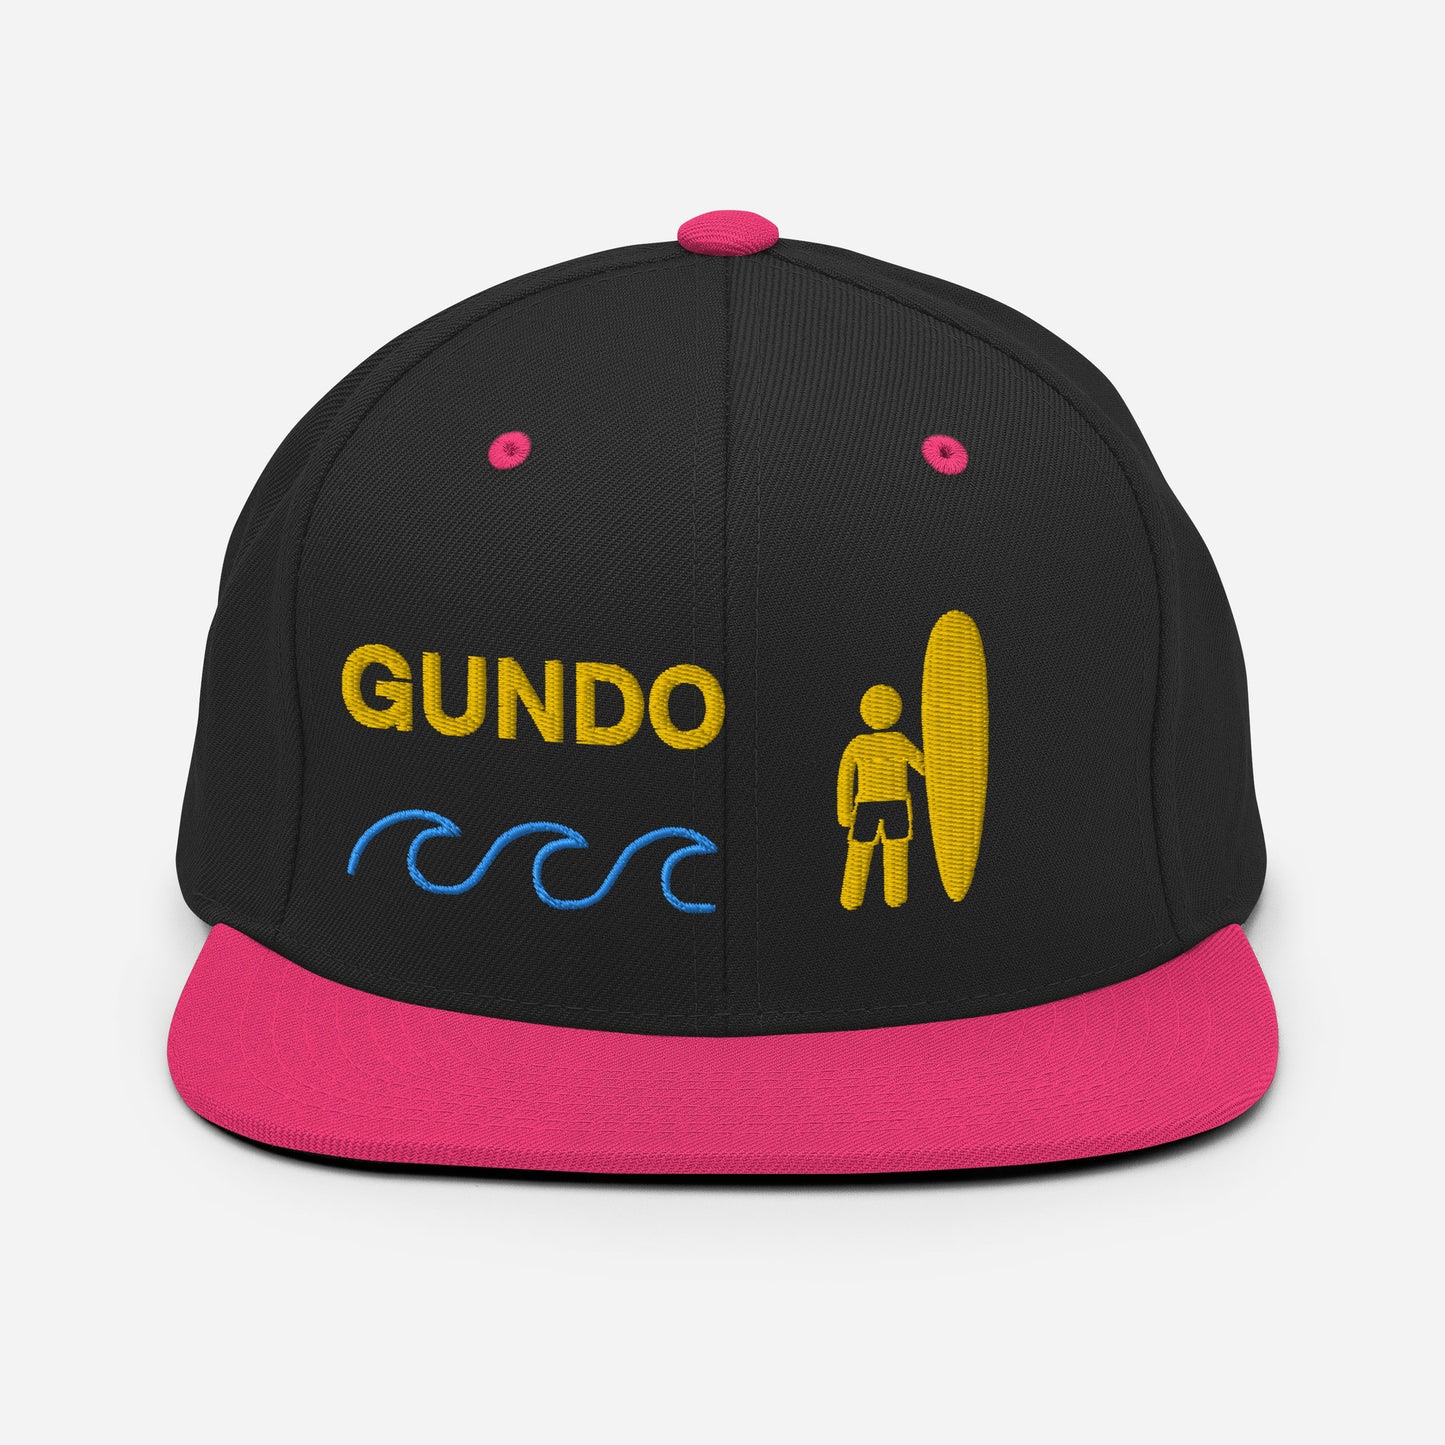 El Segundo - GUNDO - California - South Bay - Snapback Hat - Surfing Style